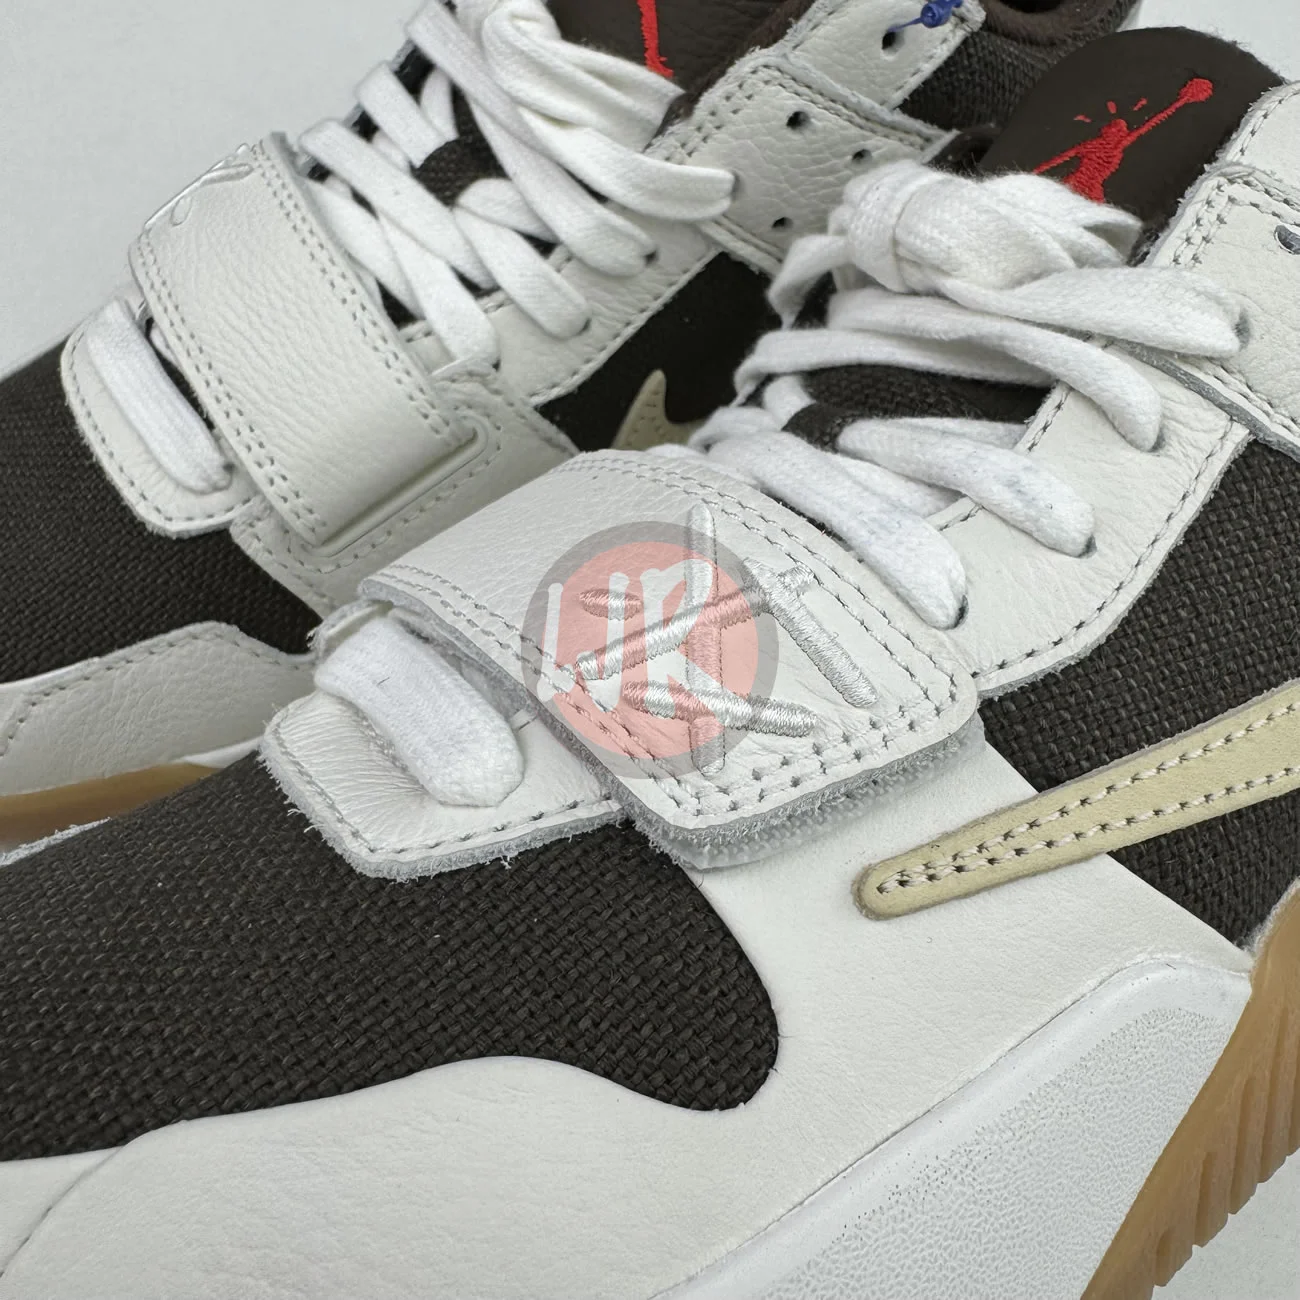 Travis Scott X Jordan Cut The Check Trainer Release Date Ljr Sneakers (13) - bc-ljr.net